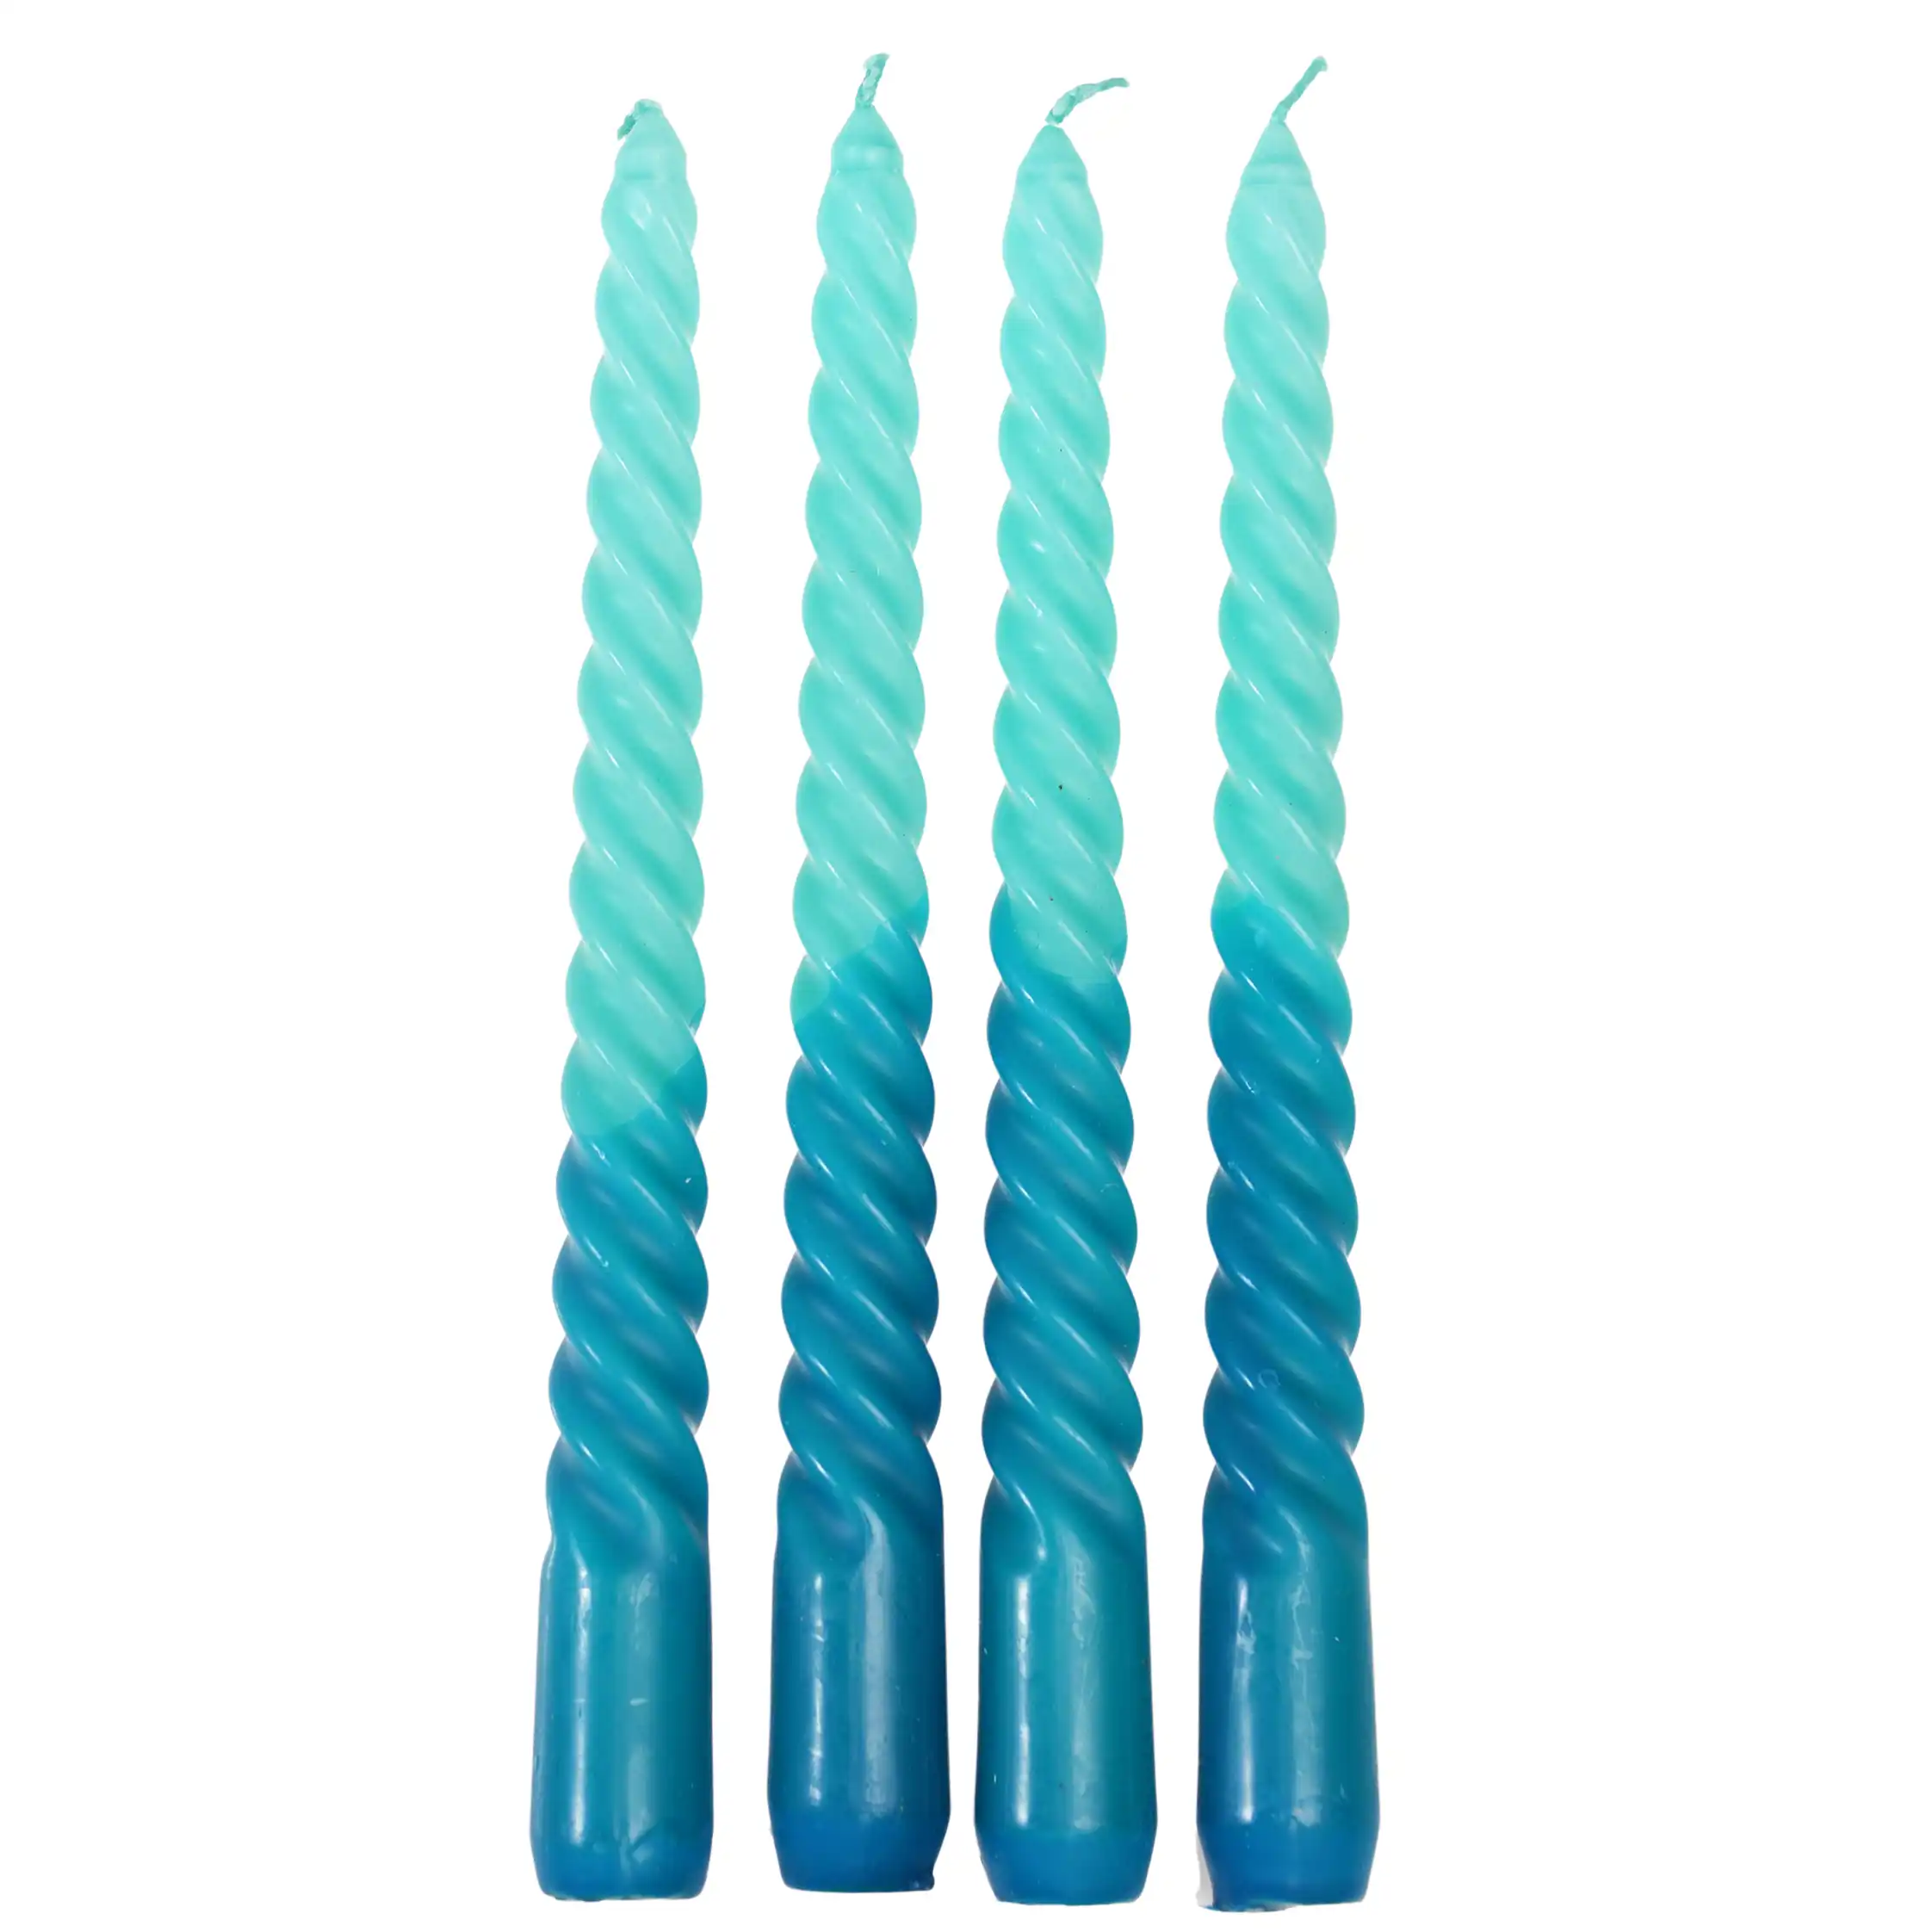 velas espirales dip dye azul claro y oscuro (juego de 4)